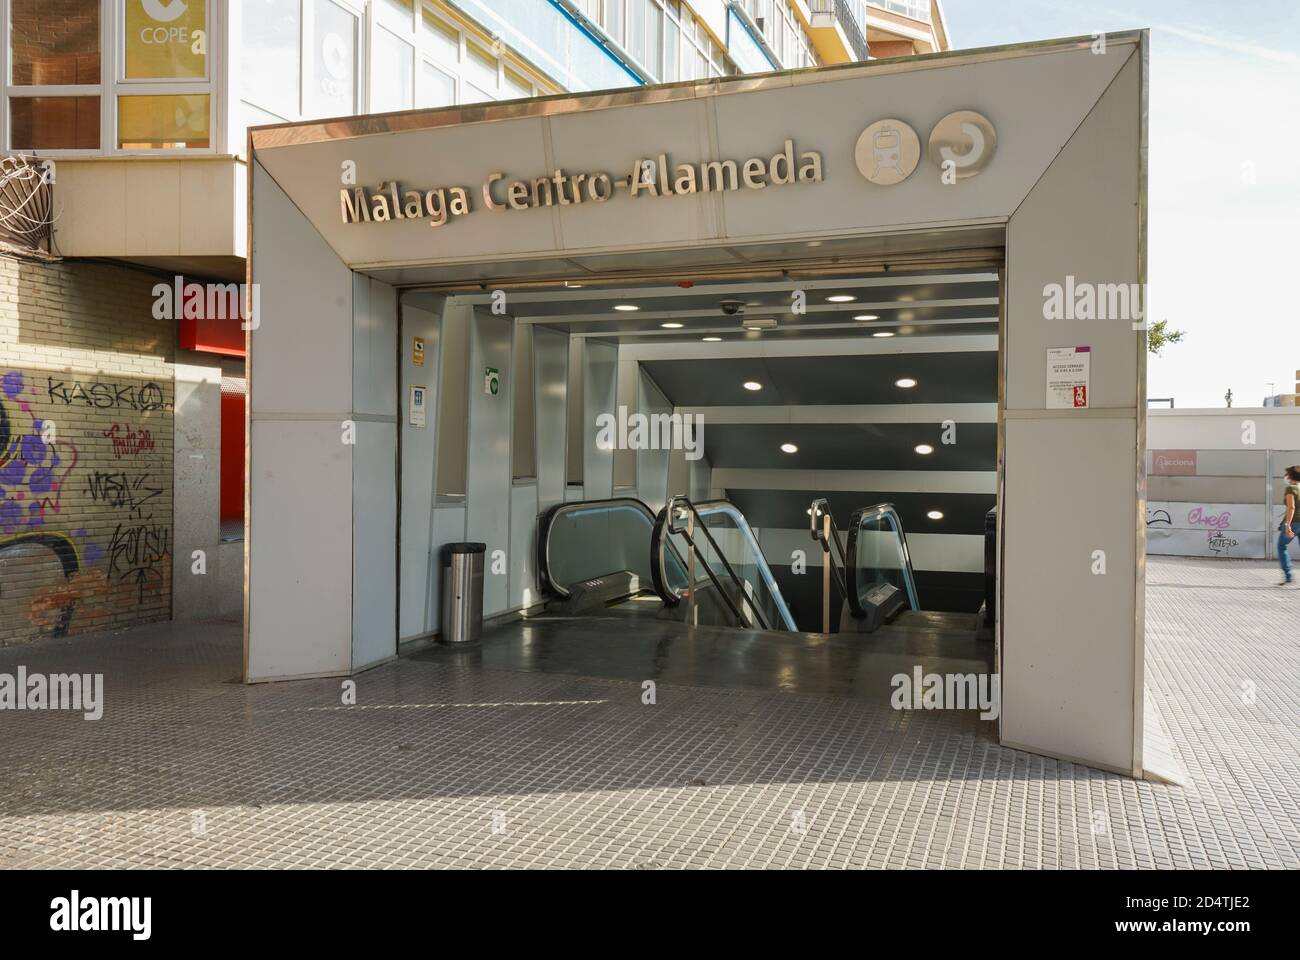 Eingang des Bahnhofs Malaga Zentrum - Alameda, Costa del sol, Andalusien, Spanien. Stockfoto